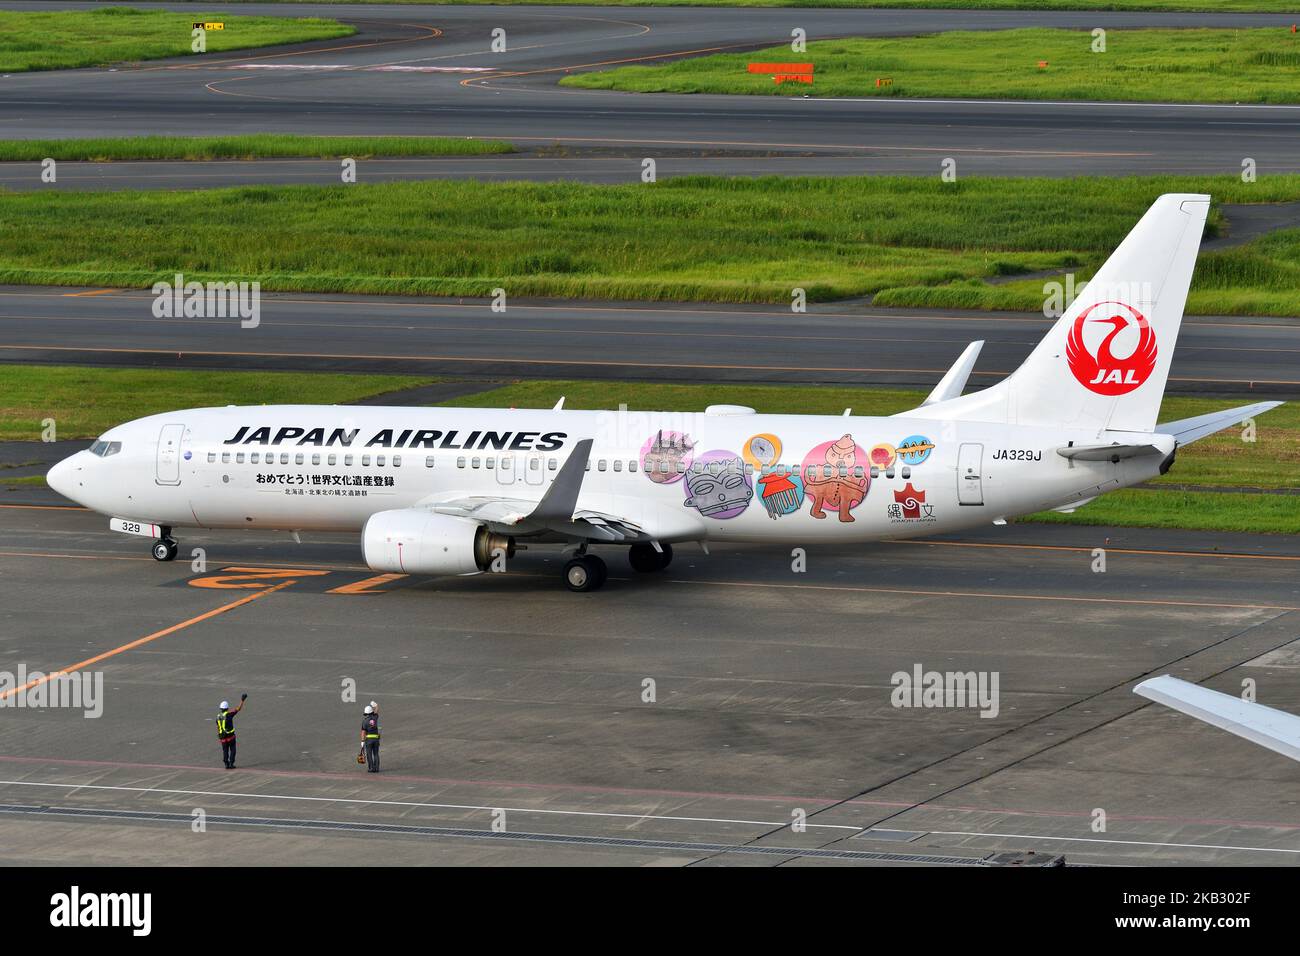 Tokyo, Japan - August 11, 2021: Japan Airlines (JAL) Boeing B737-800 (JA329J) passenger plane 'Jomon Jet' scheme taxiing at Haneda Airport. Stock Photo